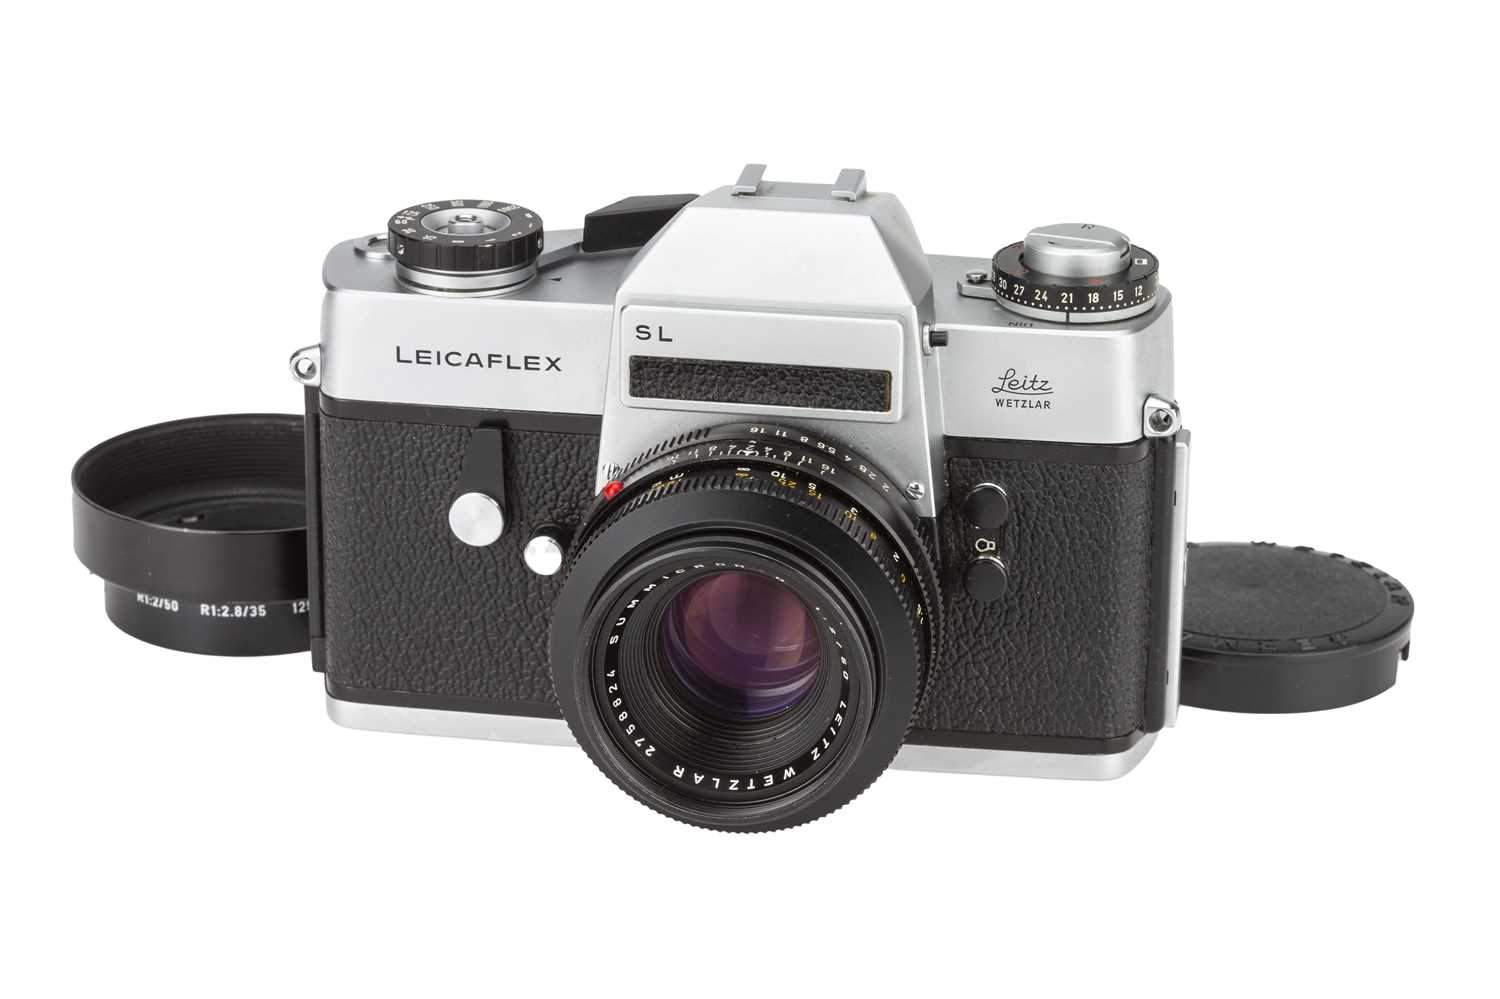 Lot 54 - A Leica Leicaflex SL SLR Camera